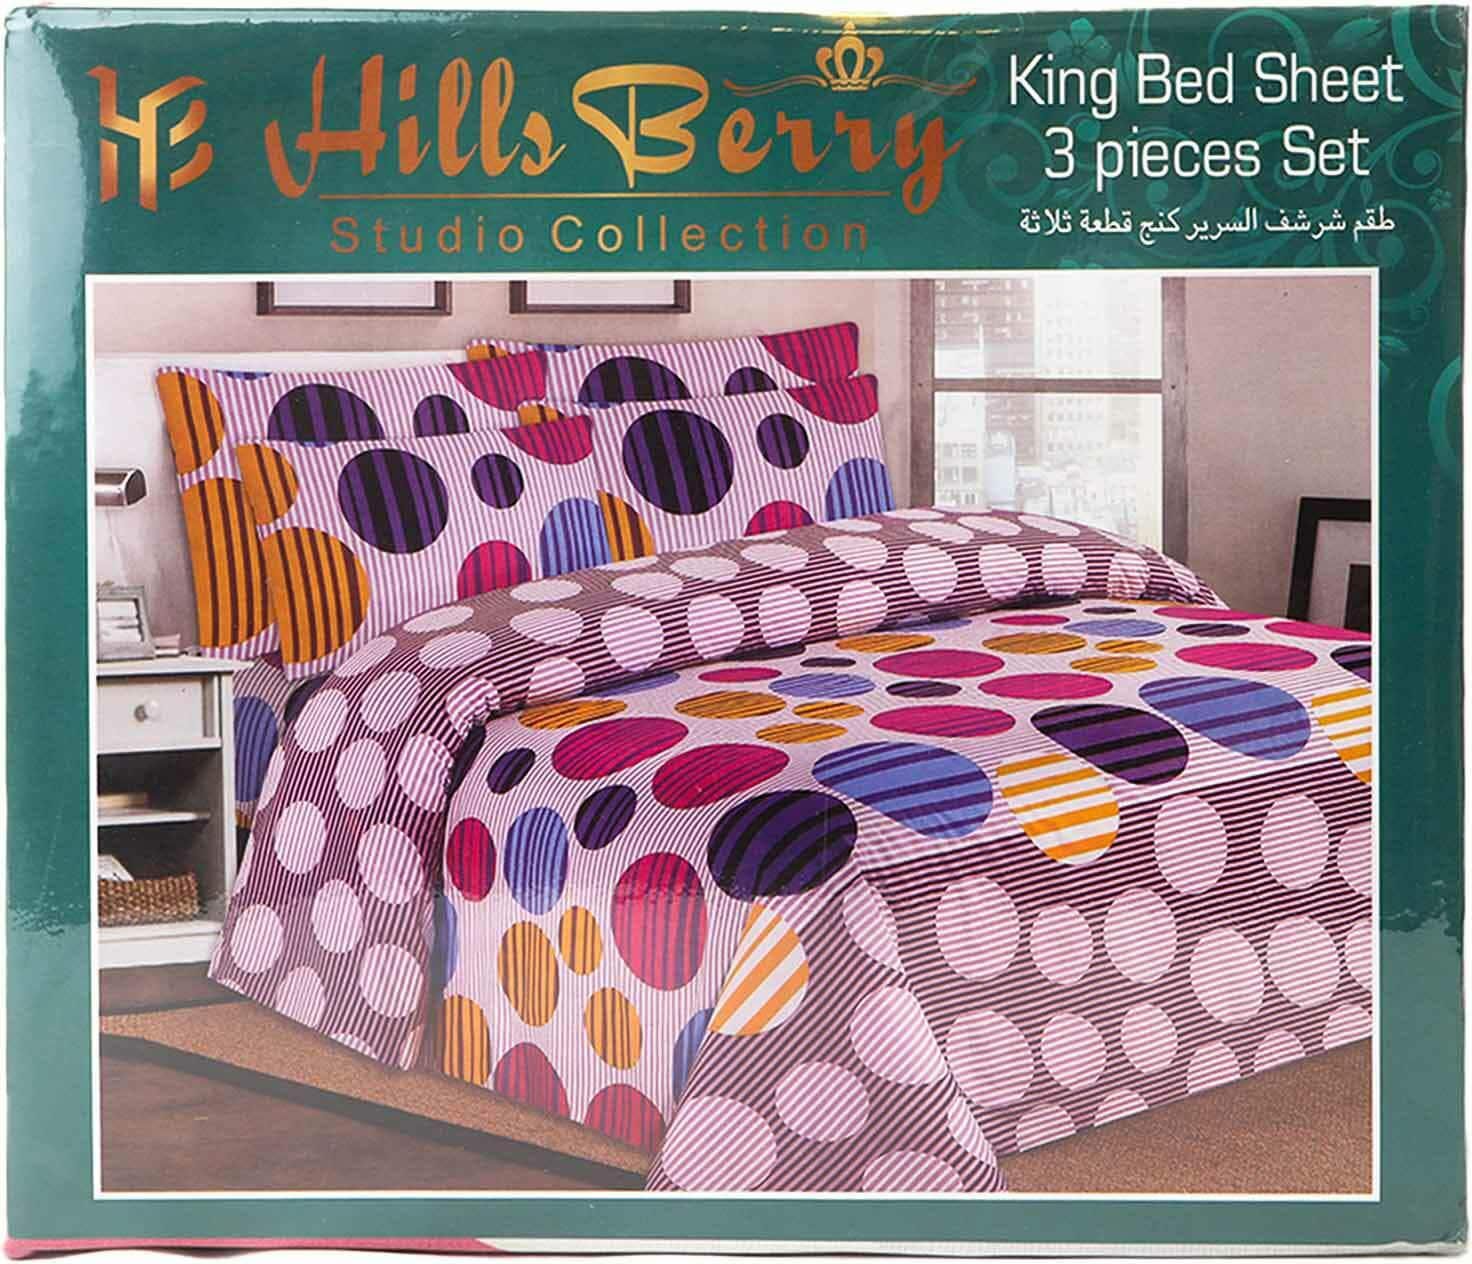 King bed sheet 3 pieces set 